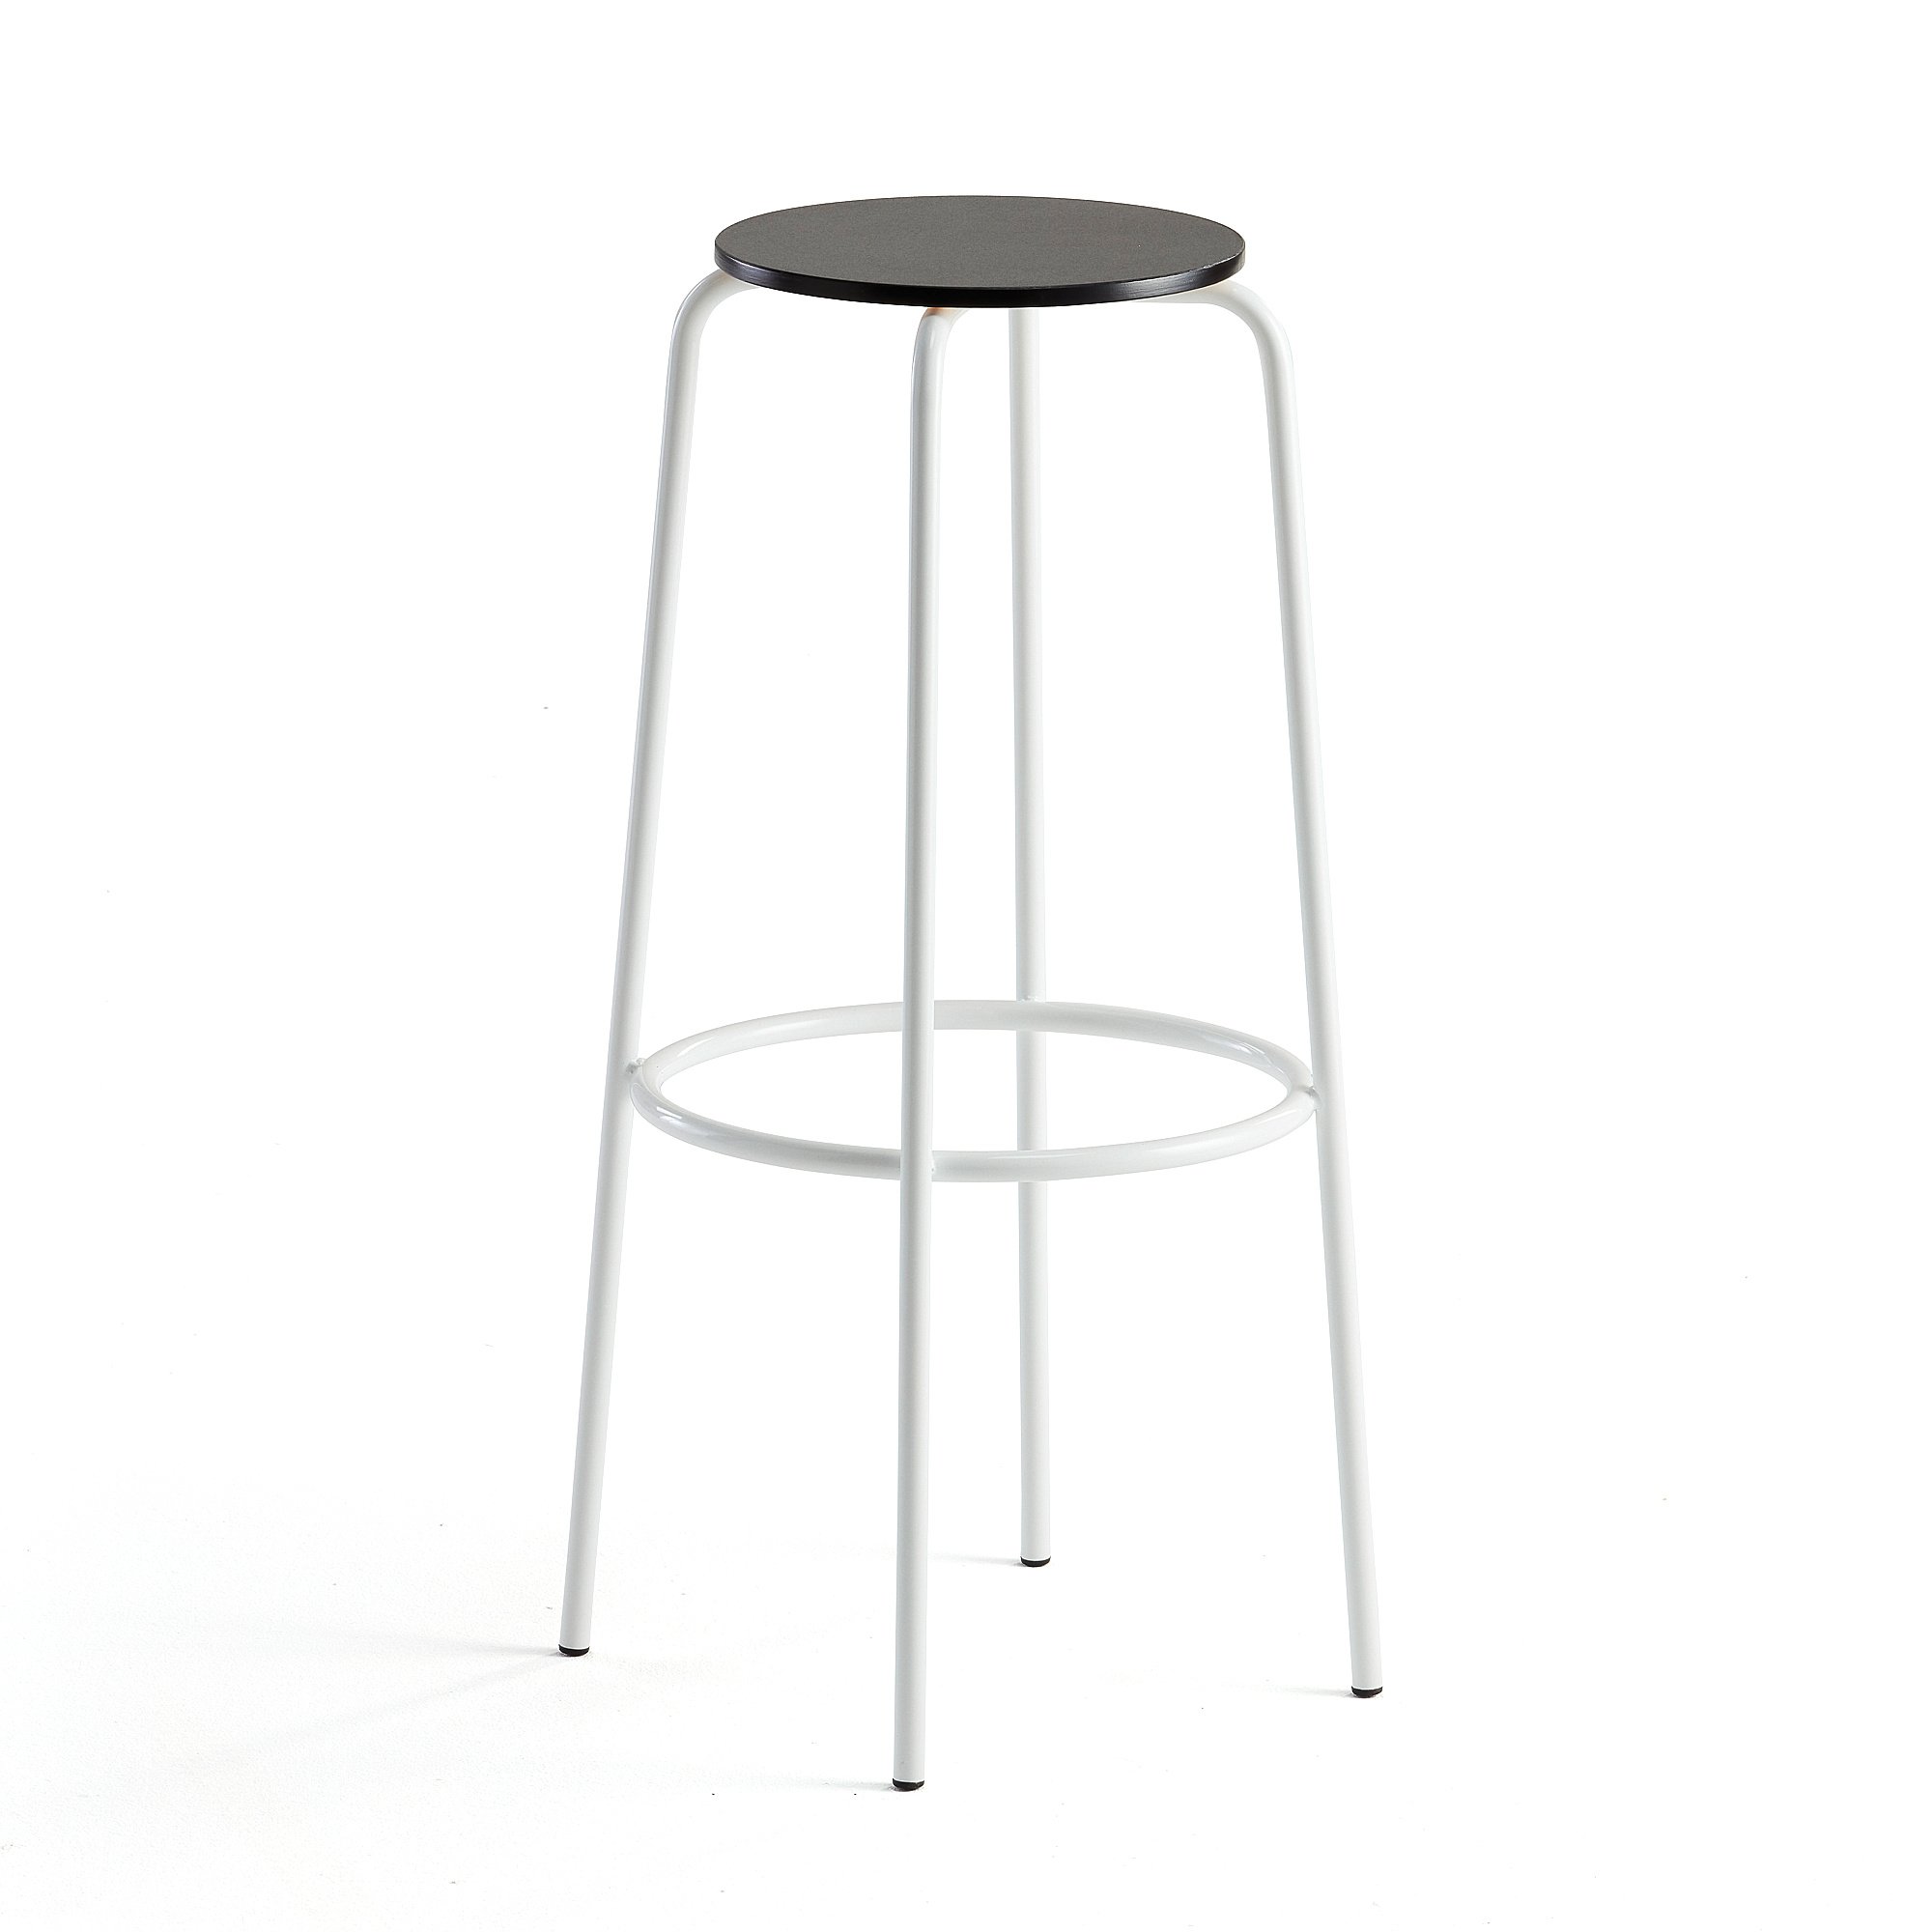 E-shop Barová stolička TIMMY, biely rám, čierny sedák, V 830 mm